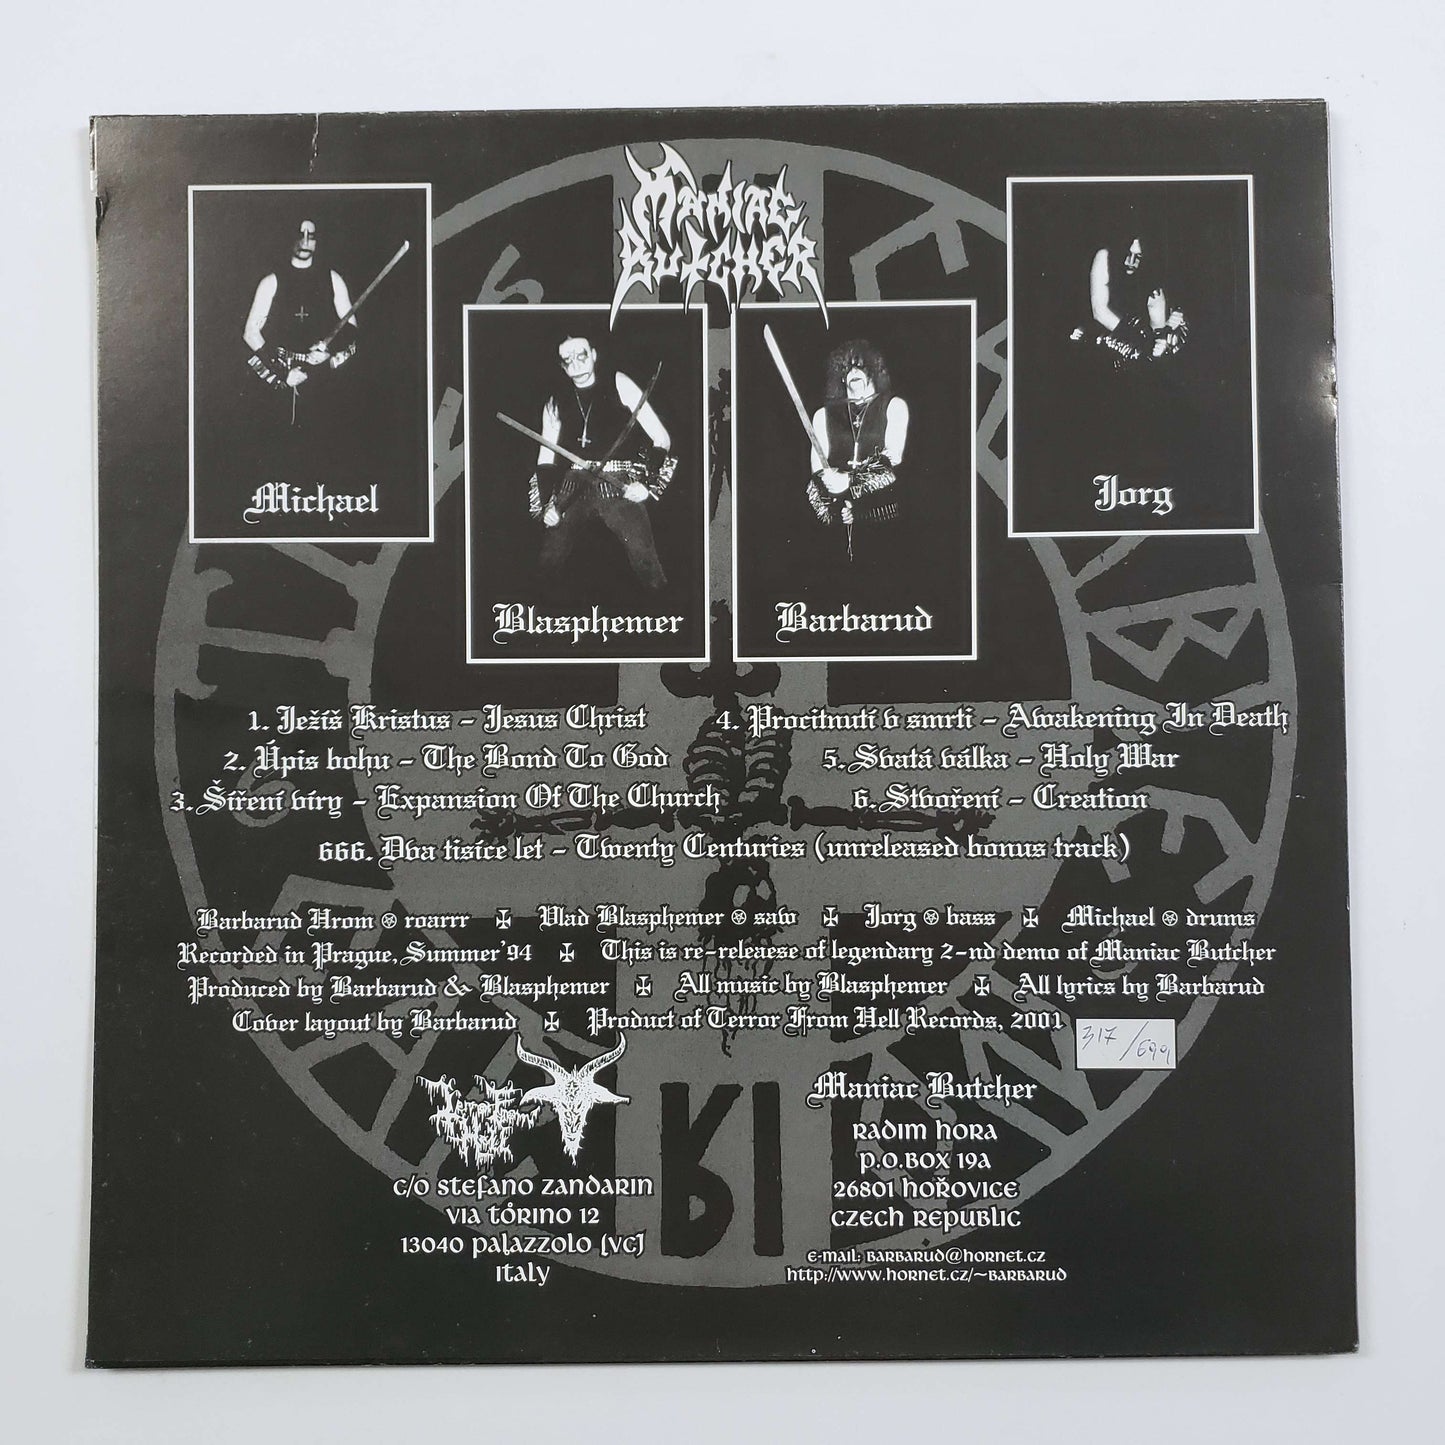 Maniac Butcher - The Incapable Carrion original LP (used)